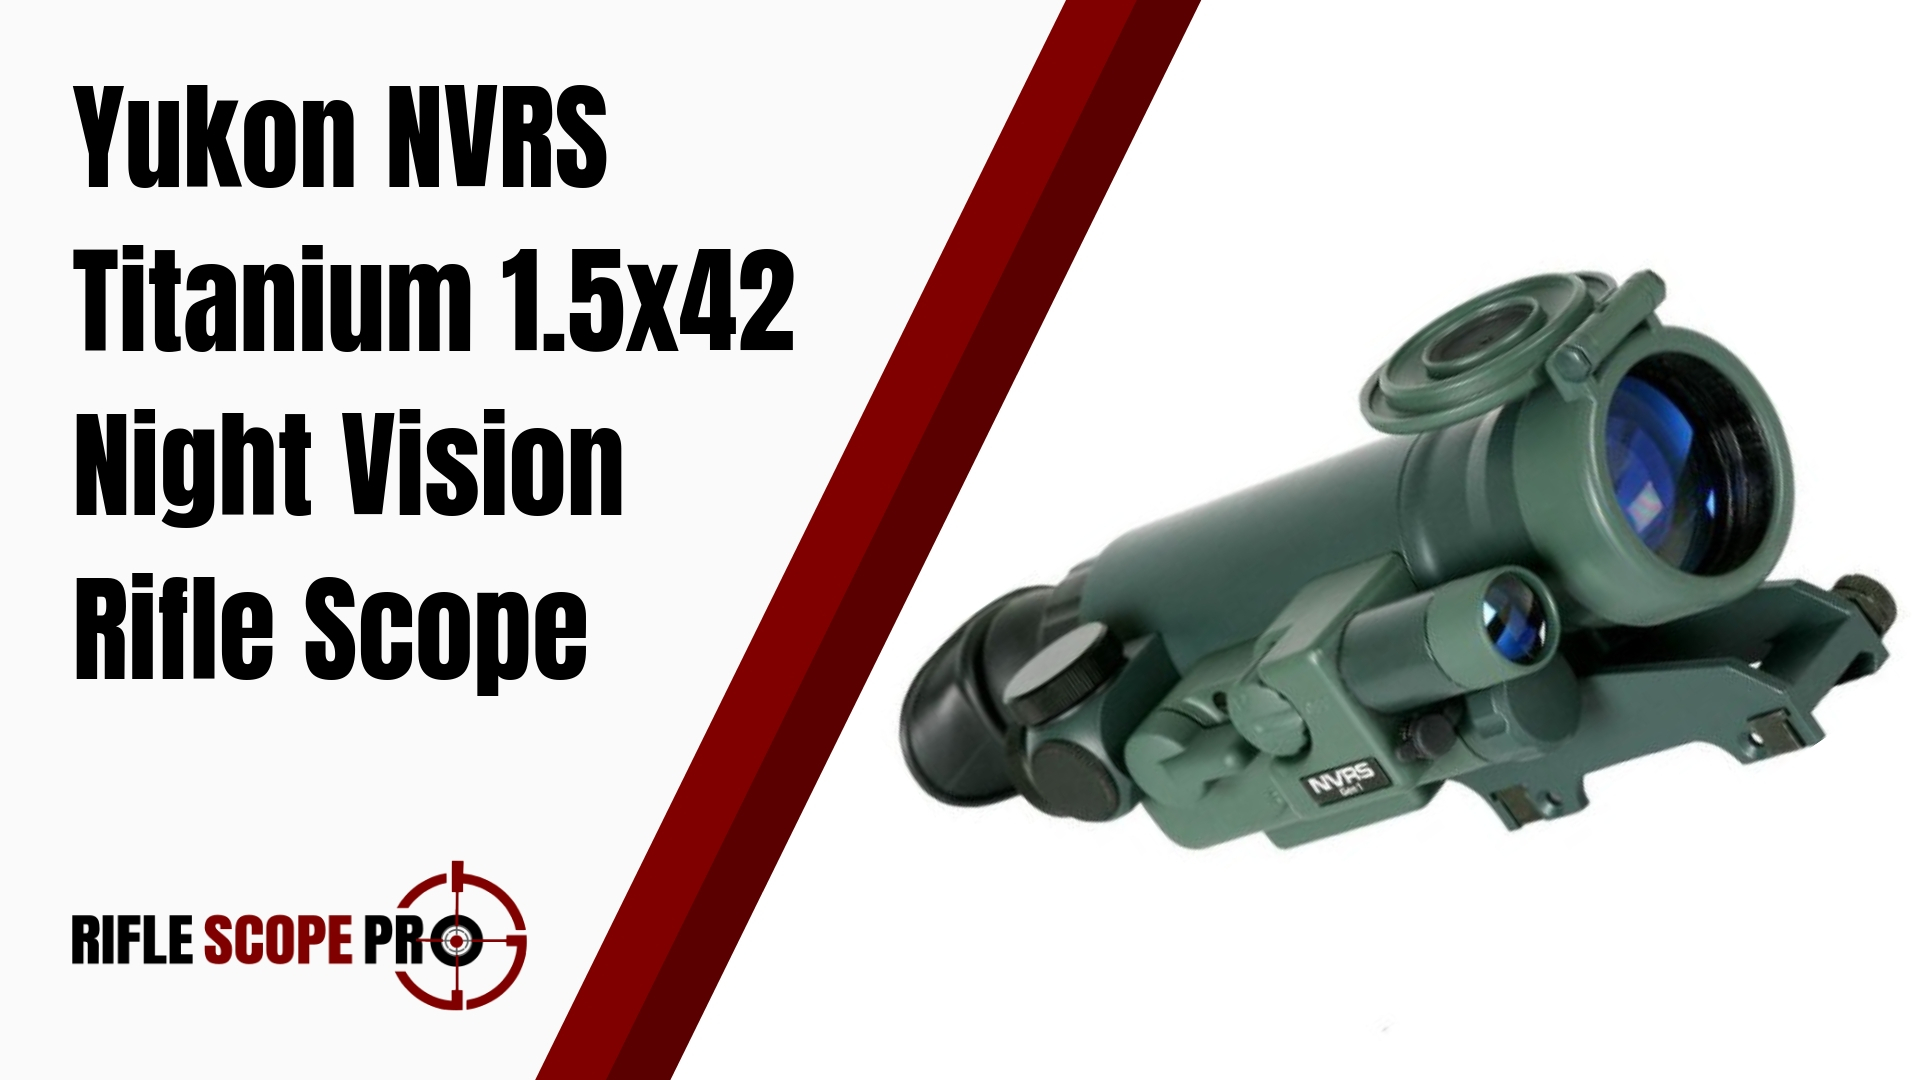 Yukon NVRS Titanium 1.5x42 Night Vision Rifle Scope Review